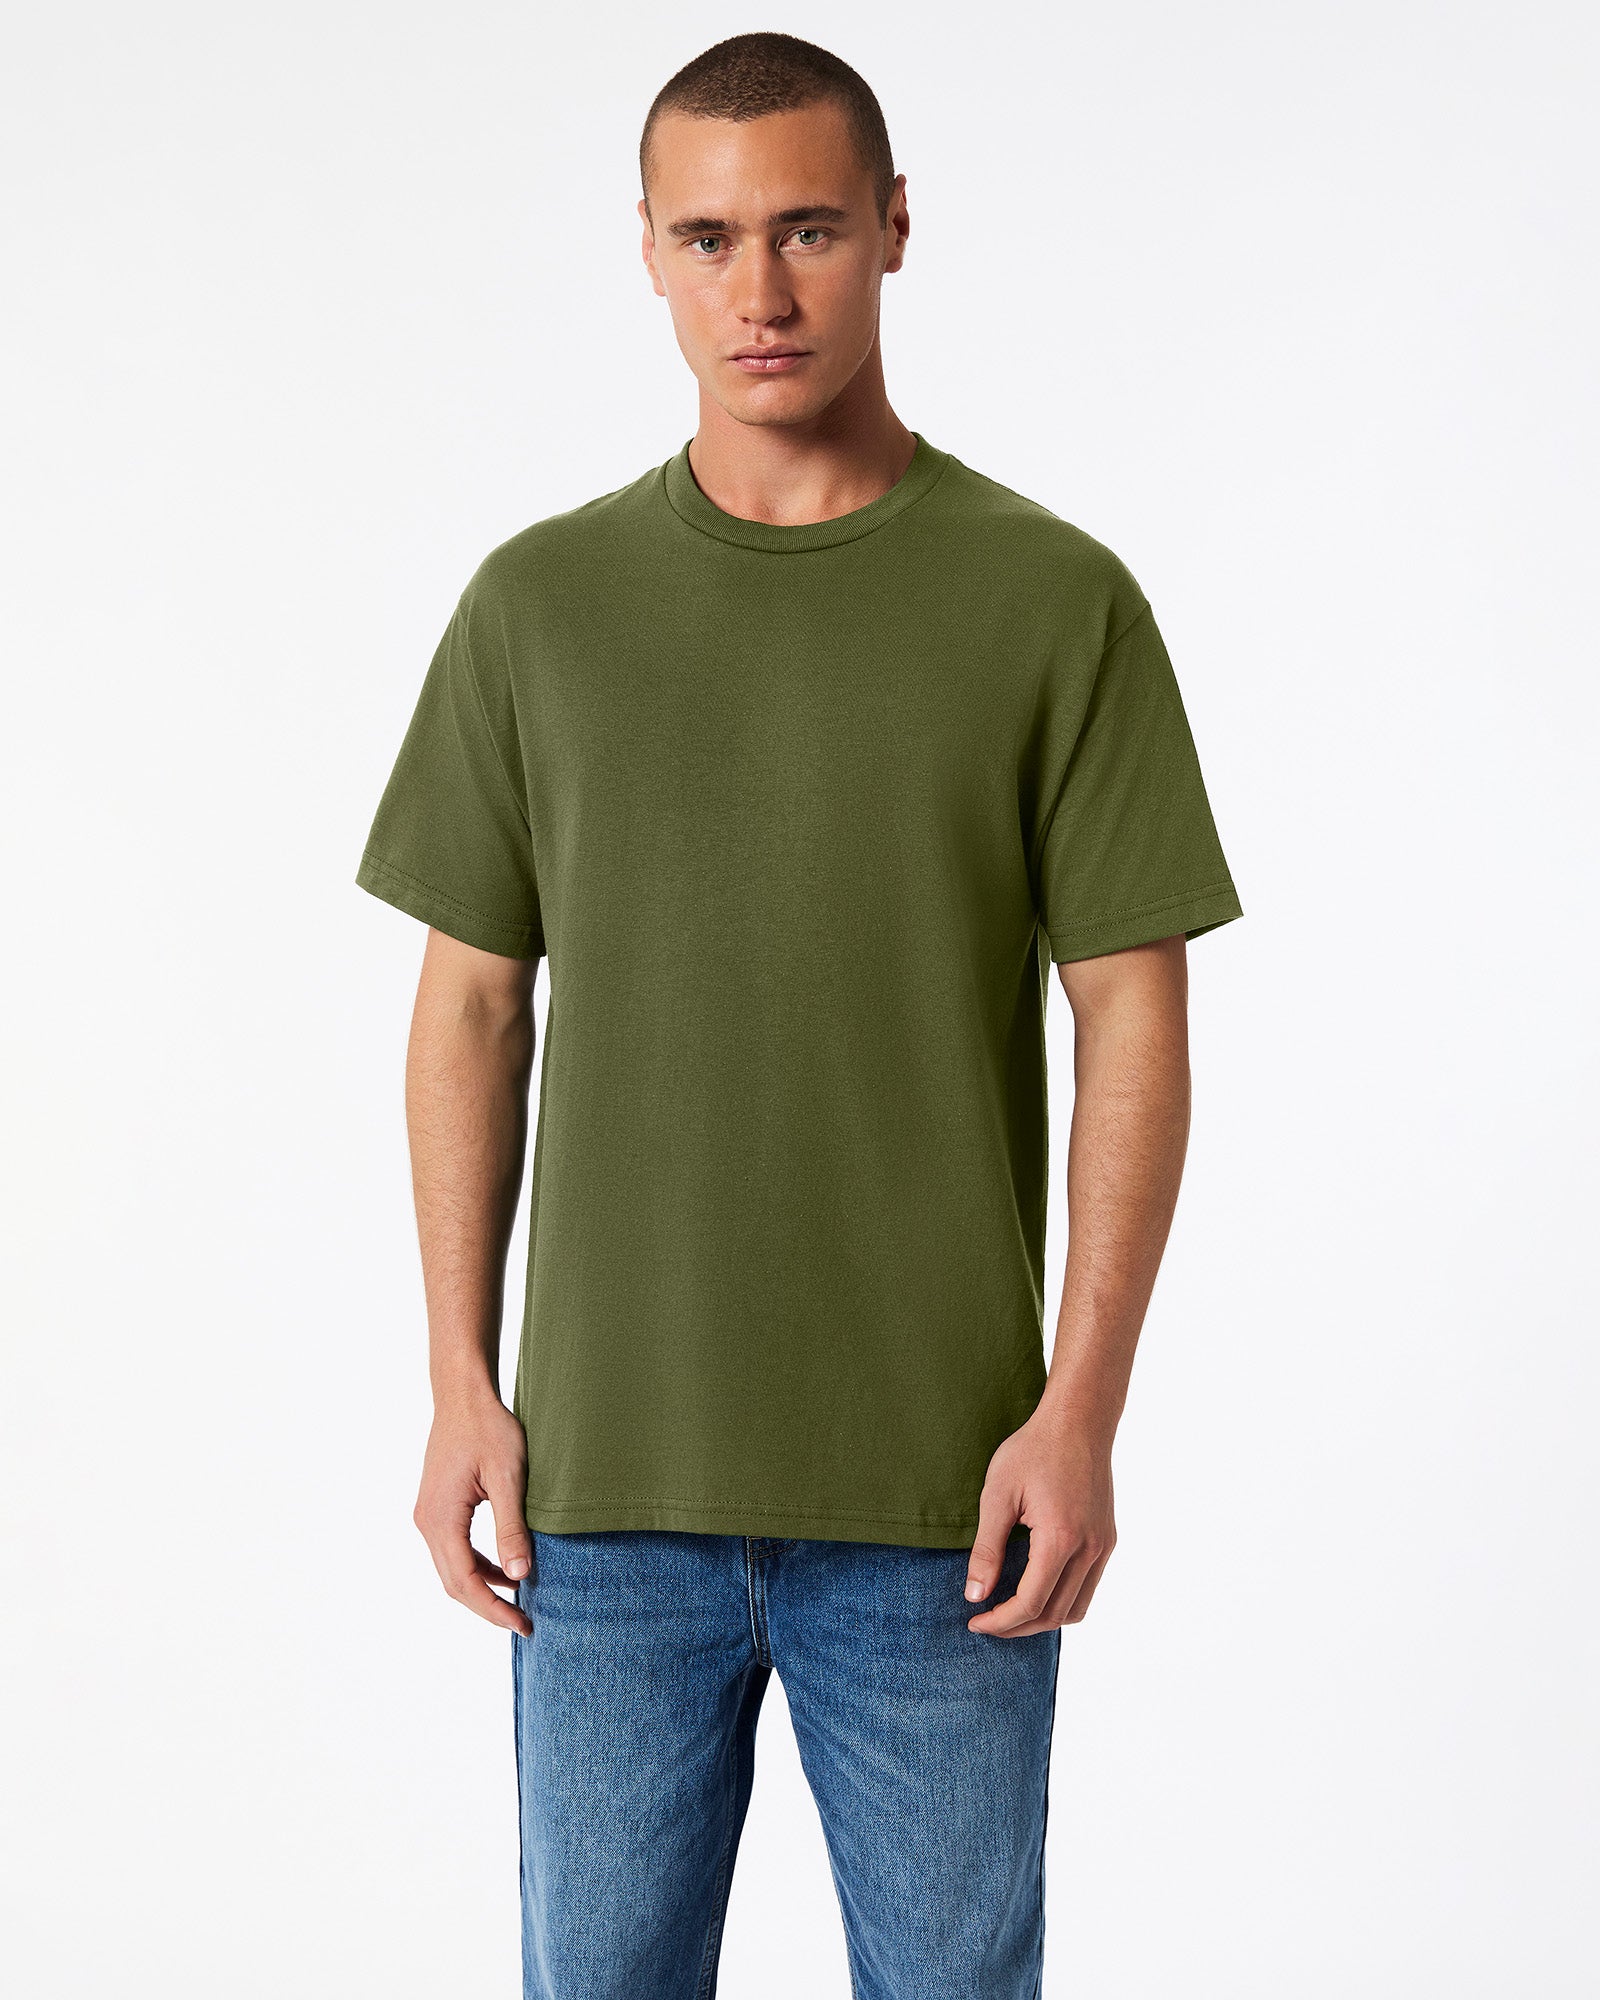 Heavyweight Unisex T-Shirt - Military Green